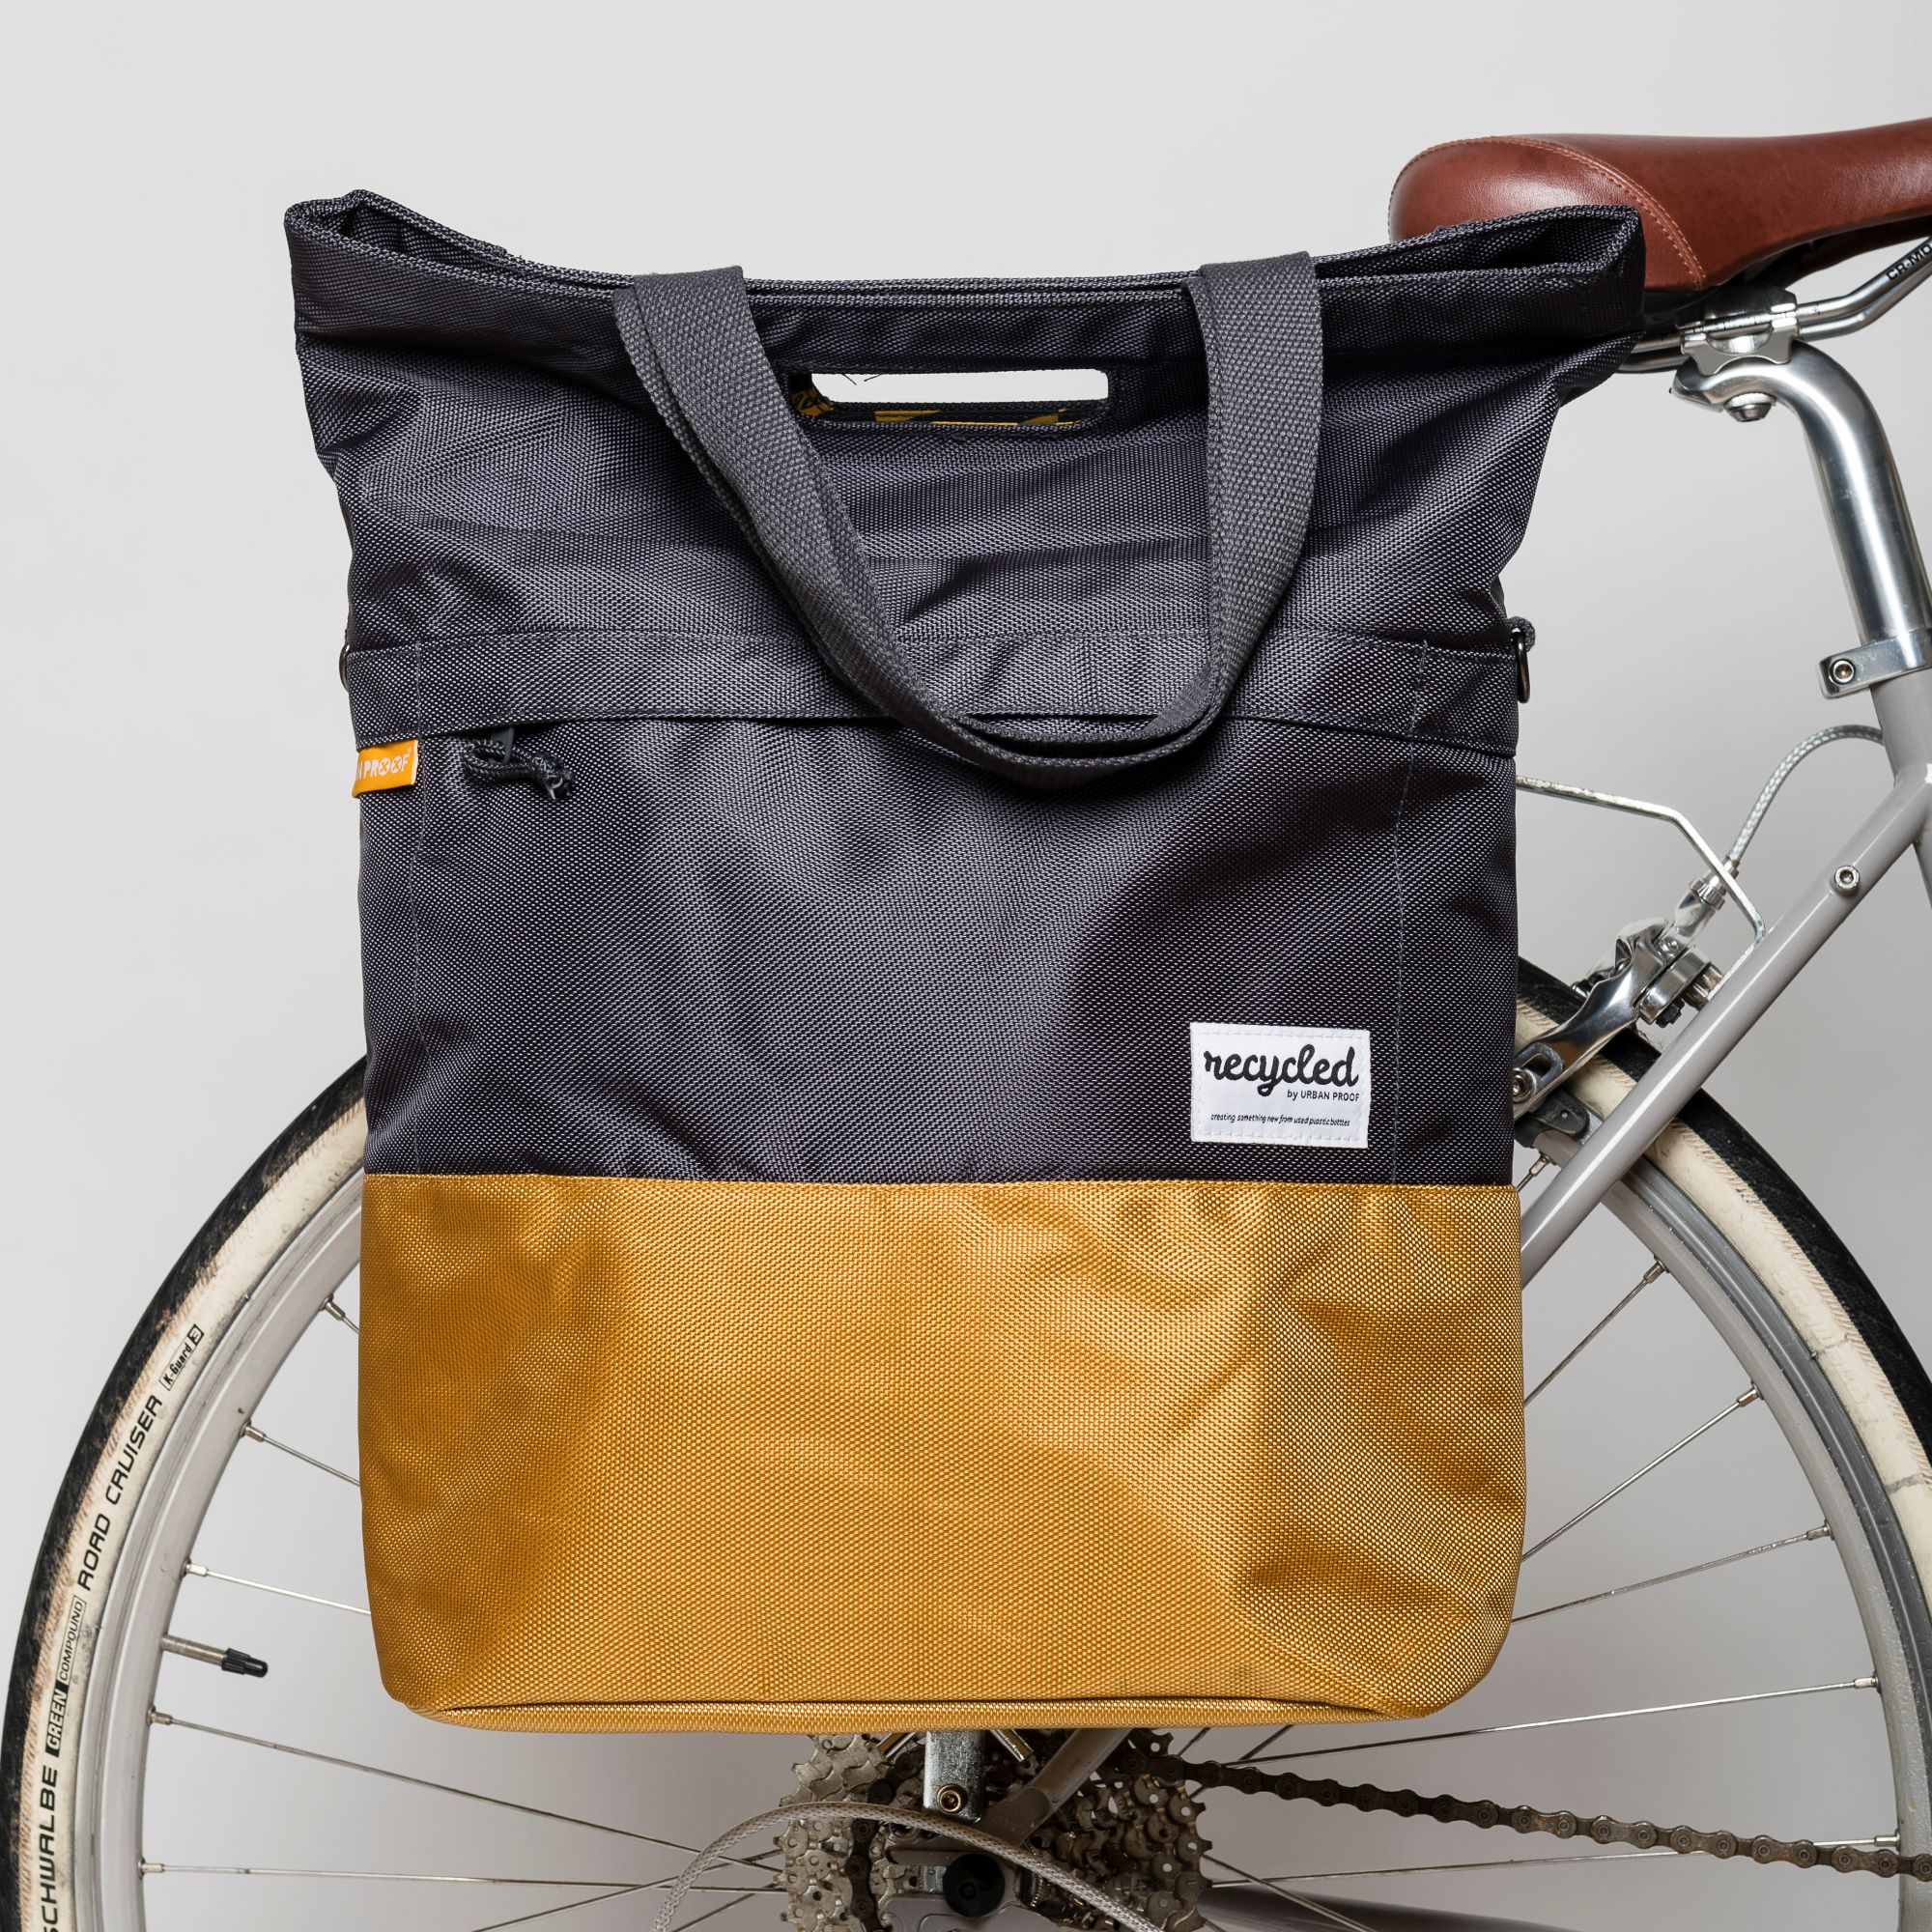 Waterproof Bike Bag with Quick Clamps - Bakcou